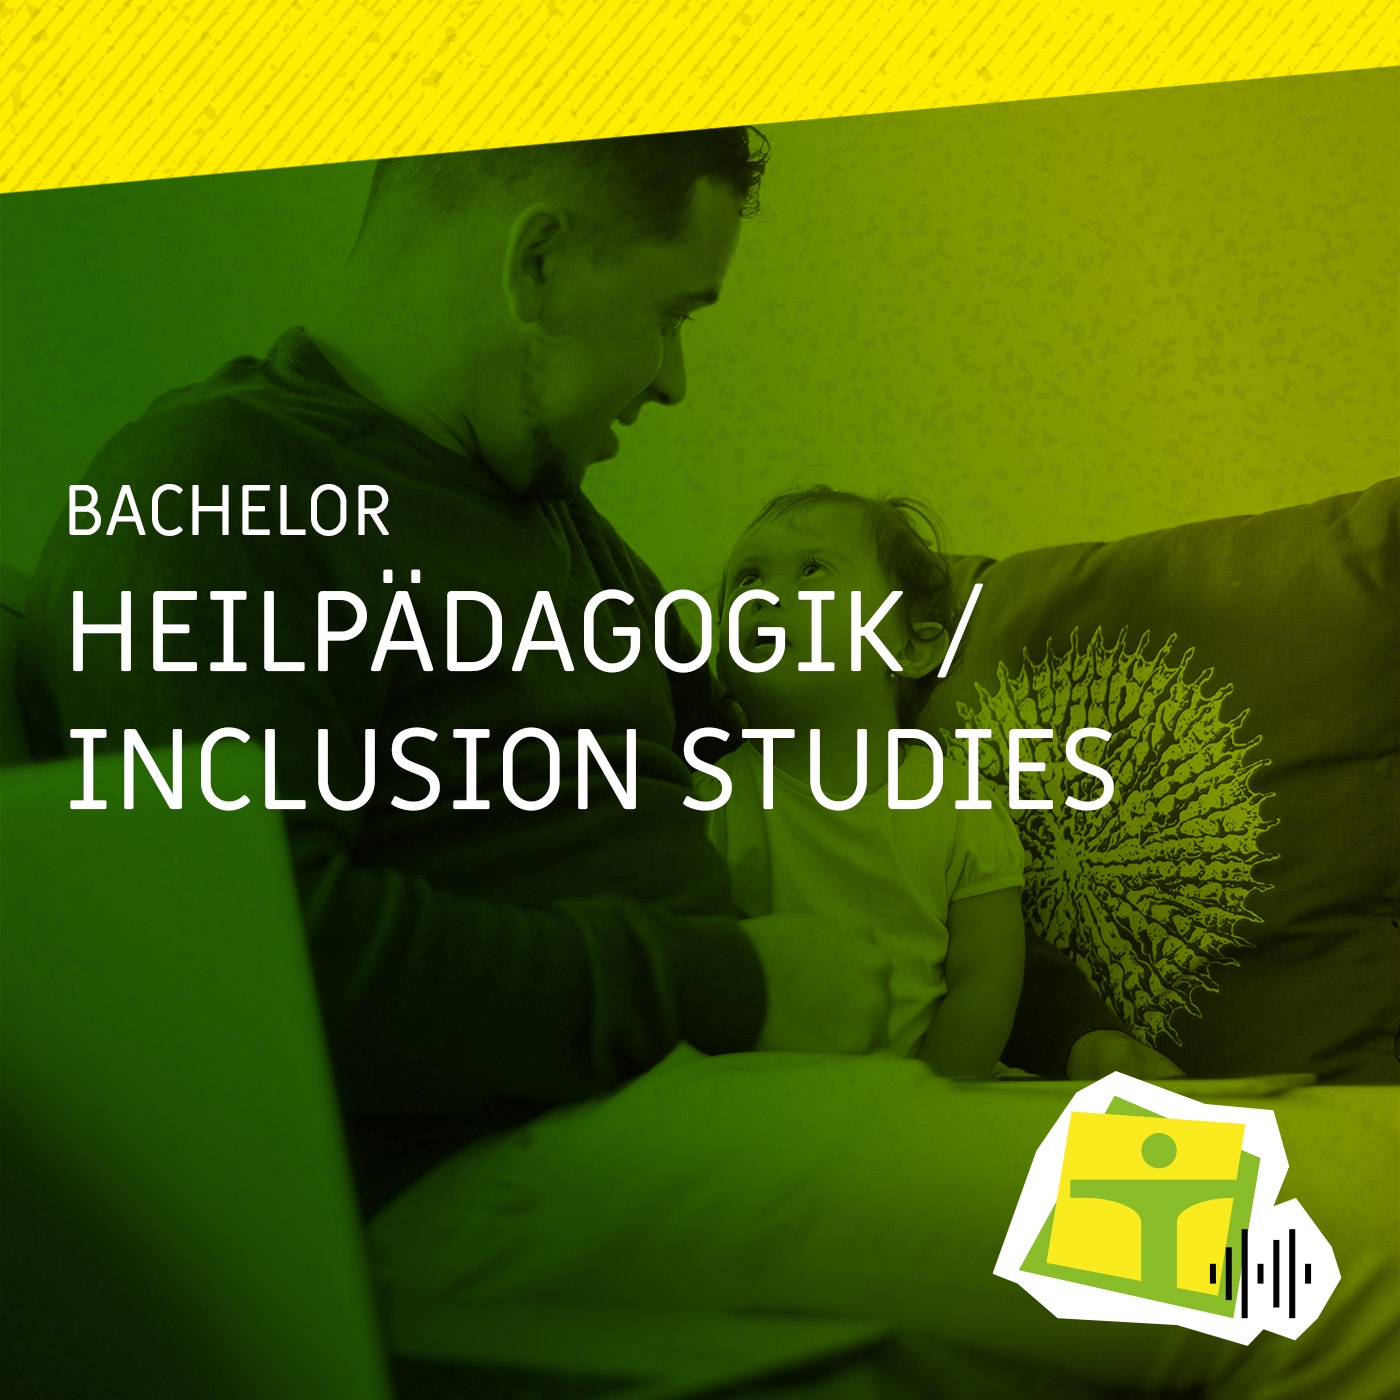 Episode 19: Bachelor-Studium Heilpädagogik/Inclusion Studies